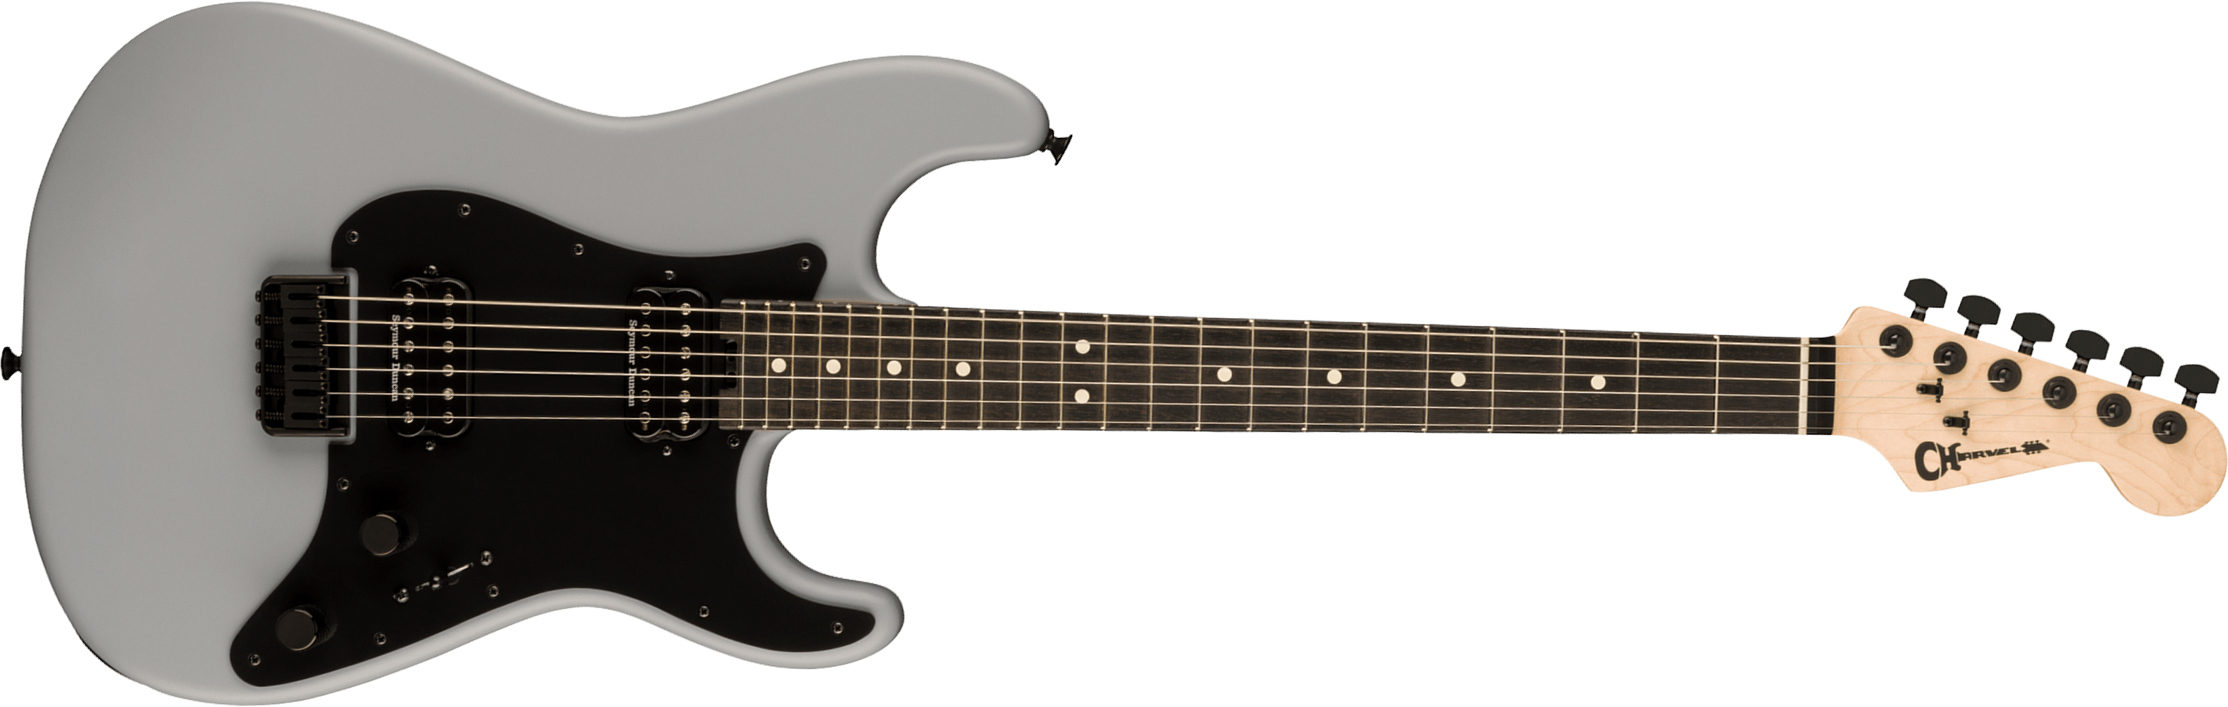 Charvel So-cal Style 1 Hh Ht E Pro-mod 2h Seymour Duncan Eb - Primer Gray - Str shape electric guitar - Main picture